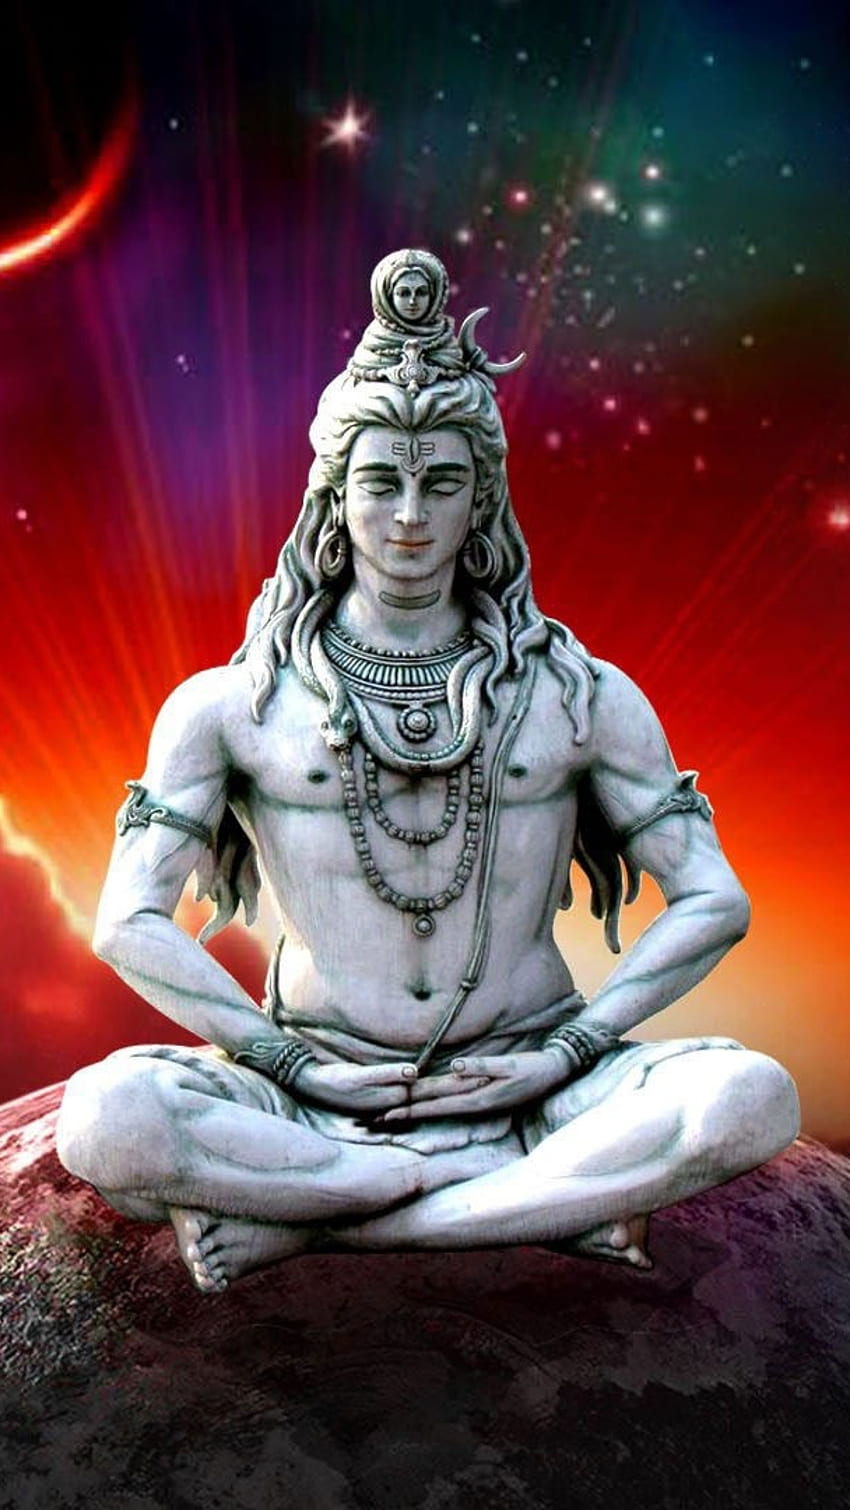 260 God photes ideas | hindu gods, indian gods, lord shiva family